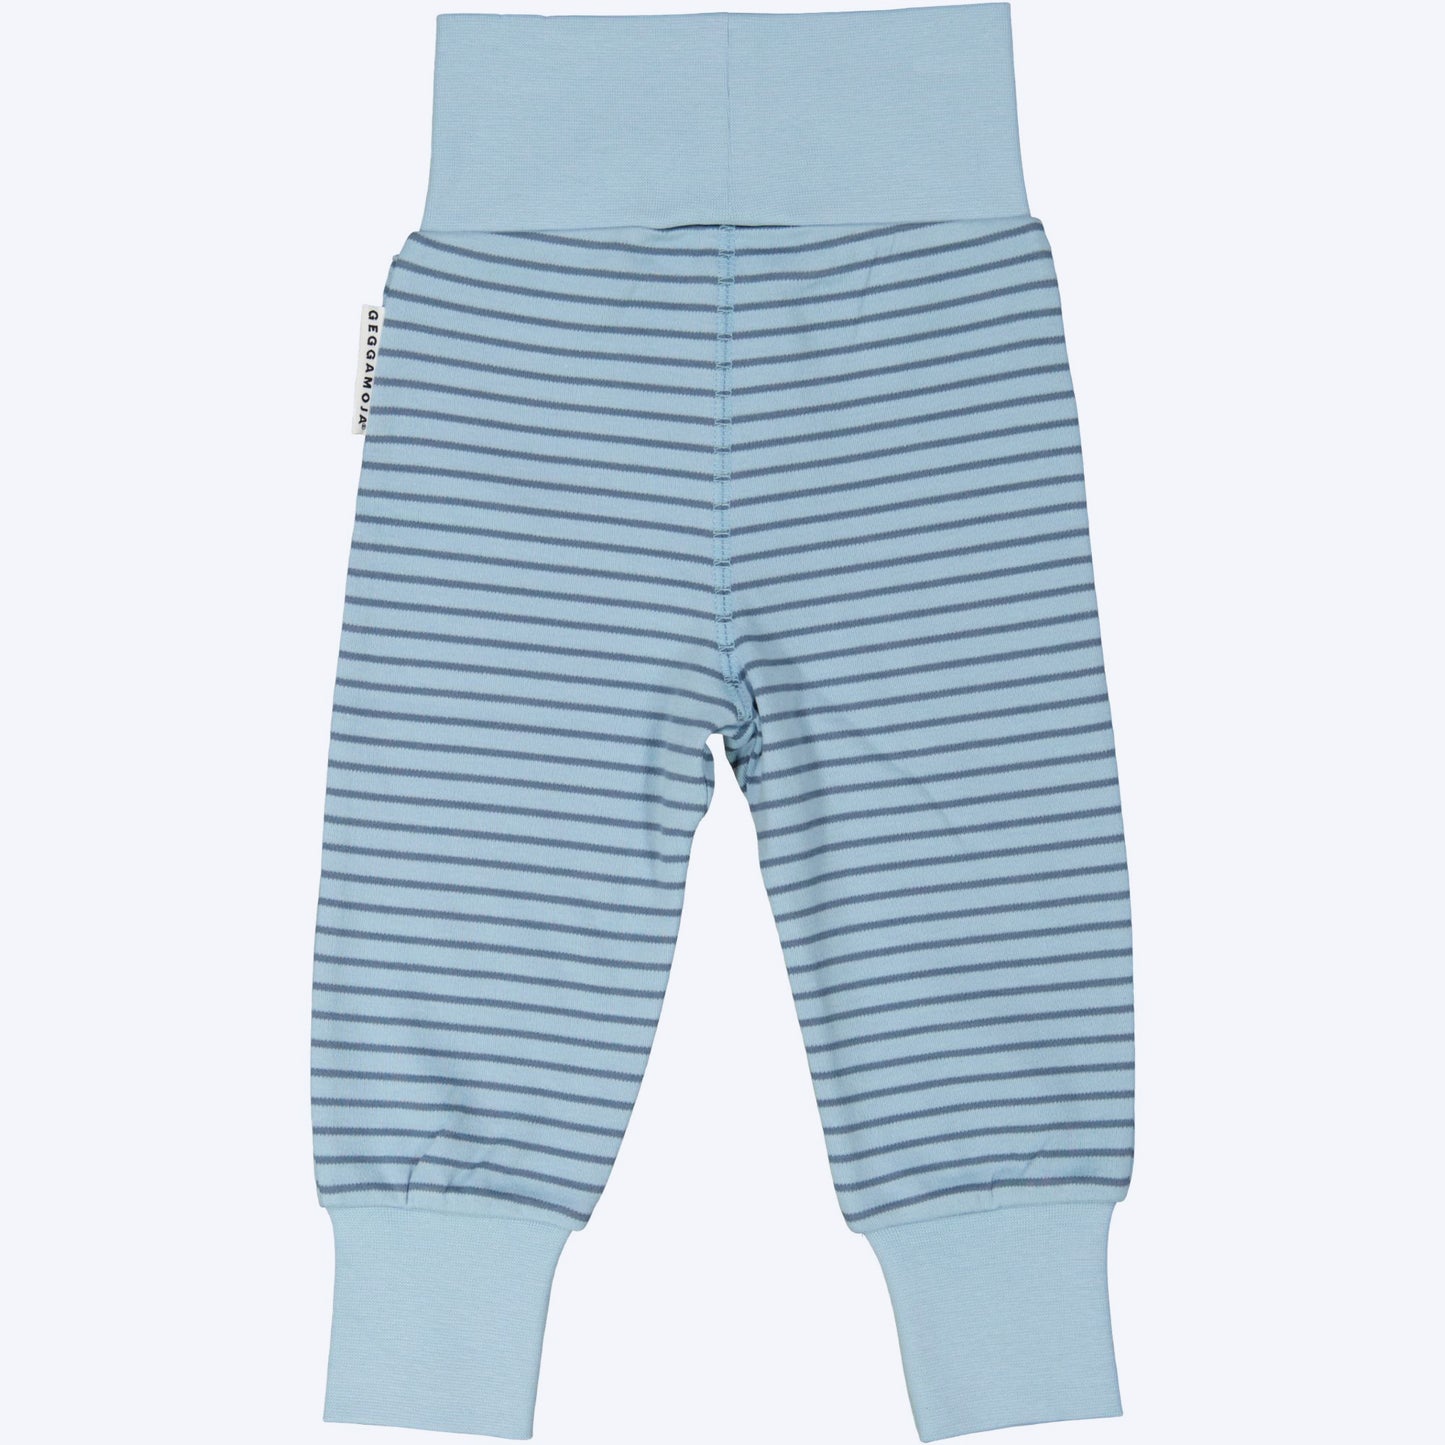 Geggamoja® Organic Cotton Baby Pants - LIGHT BLUE STRIPE